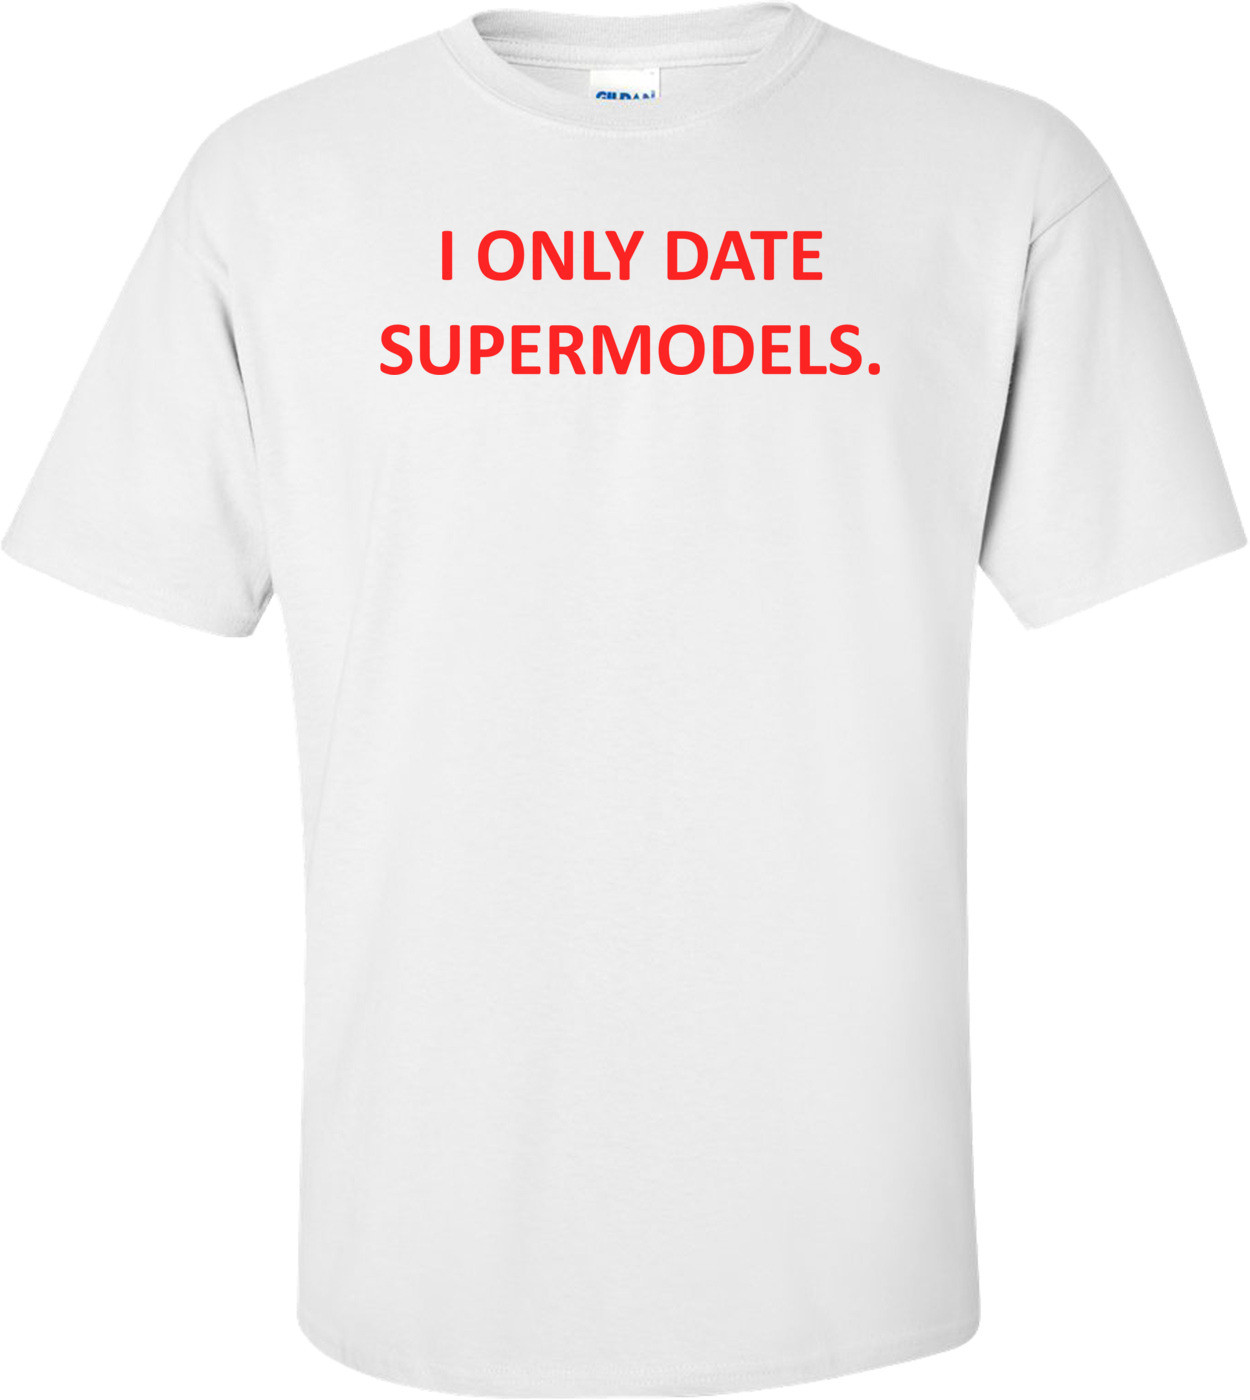 I ONLY DATE SUPERMODELS. Shirt